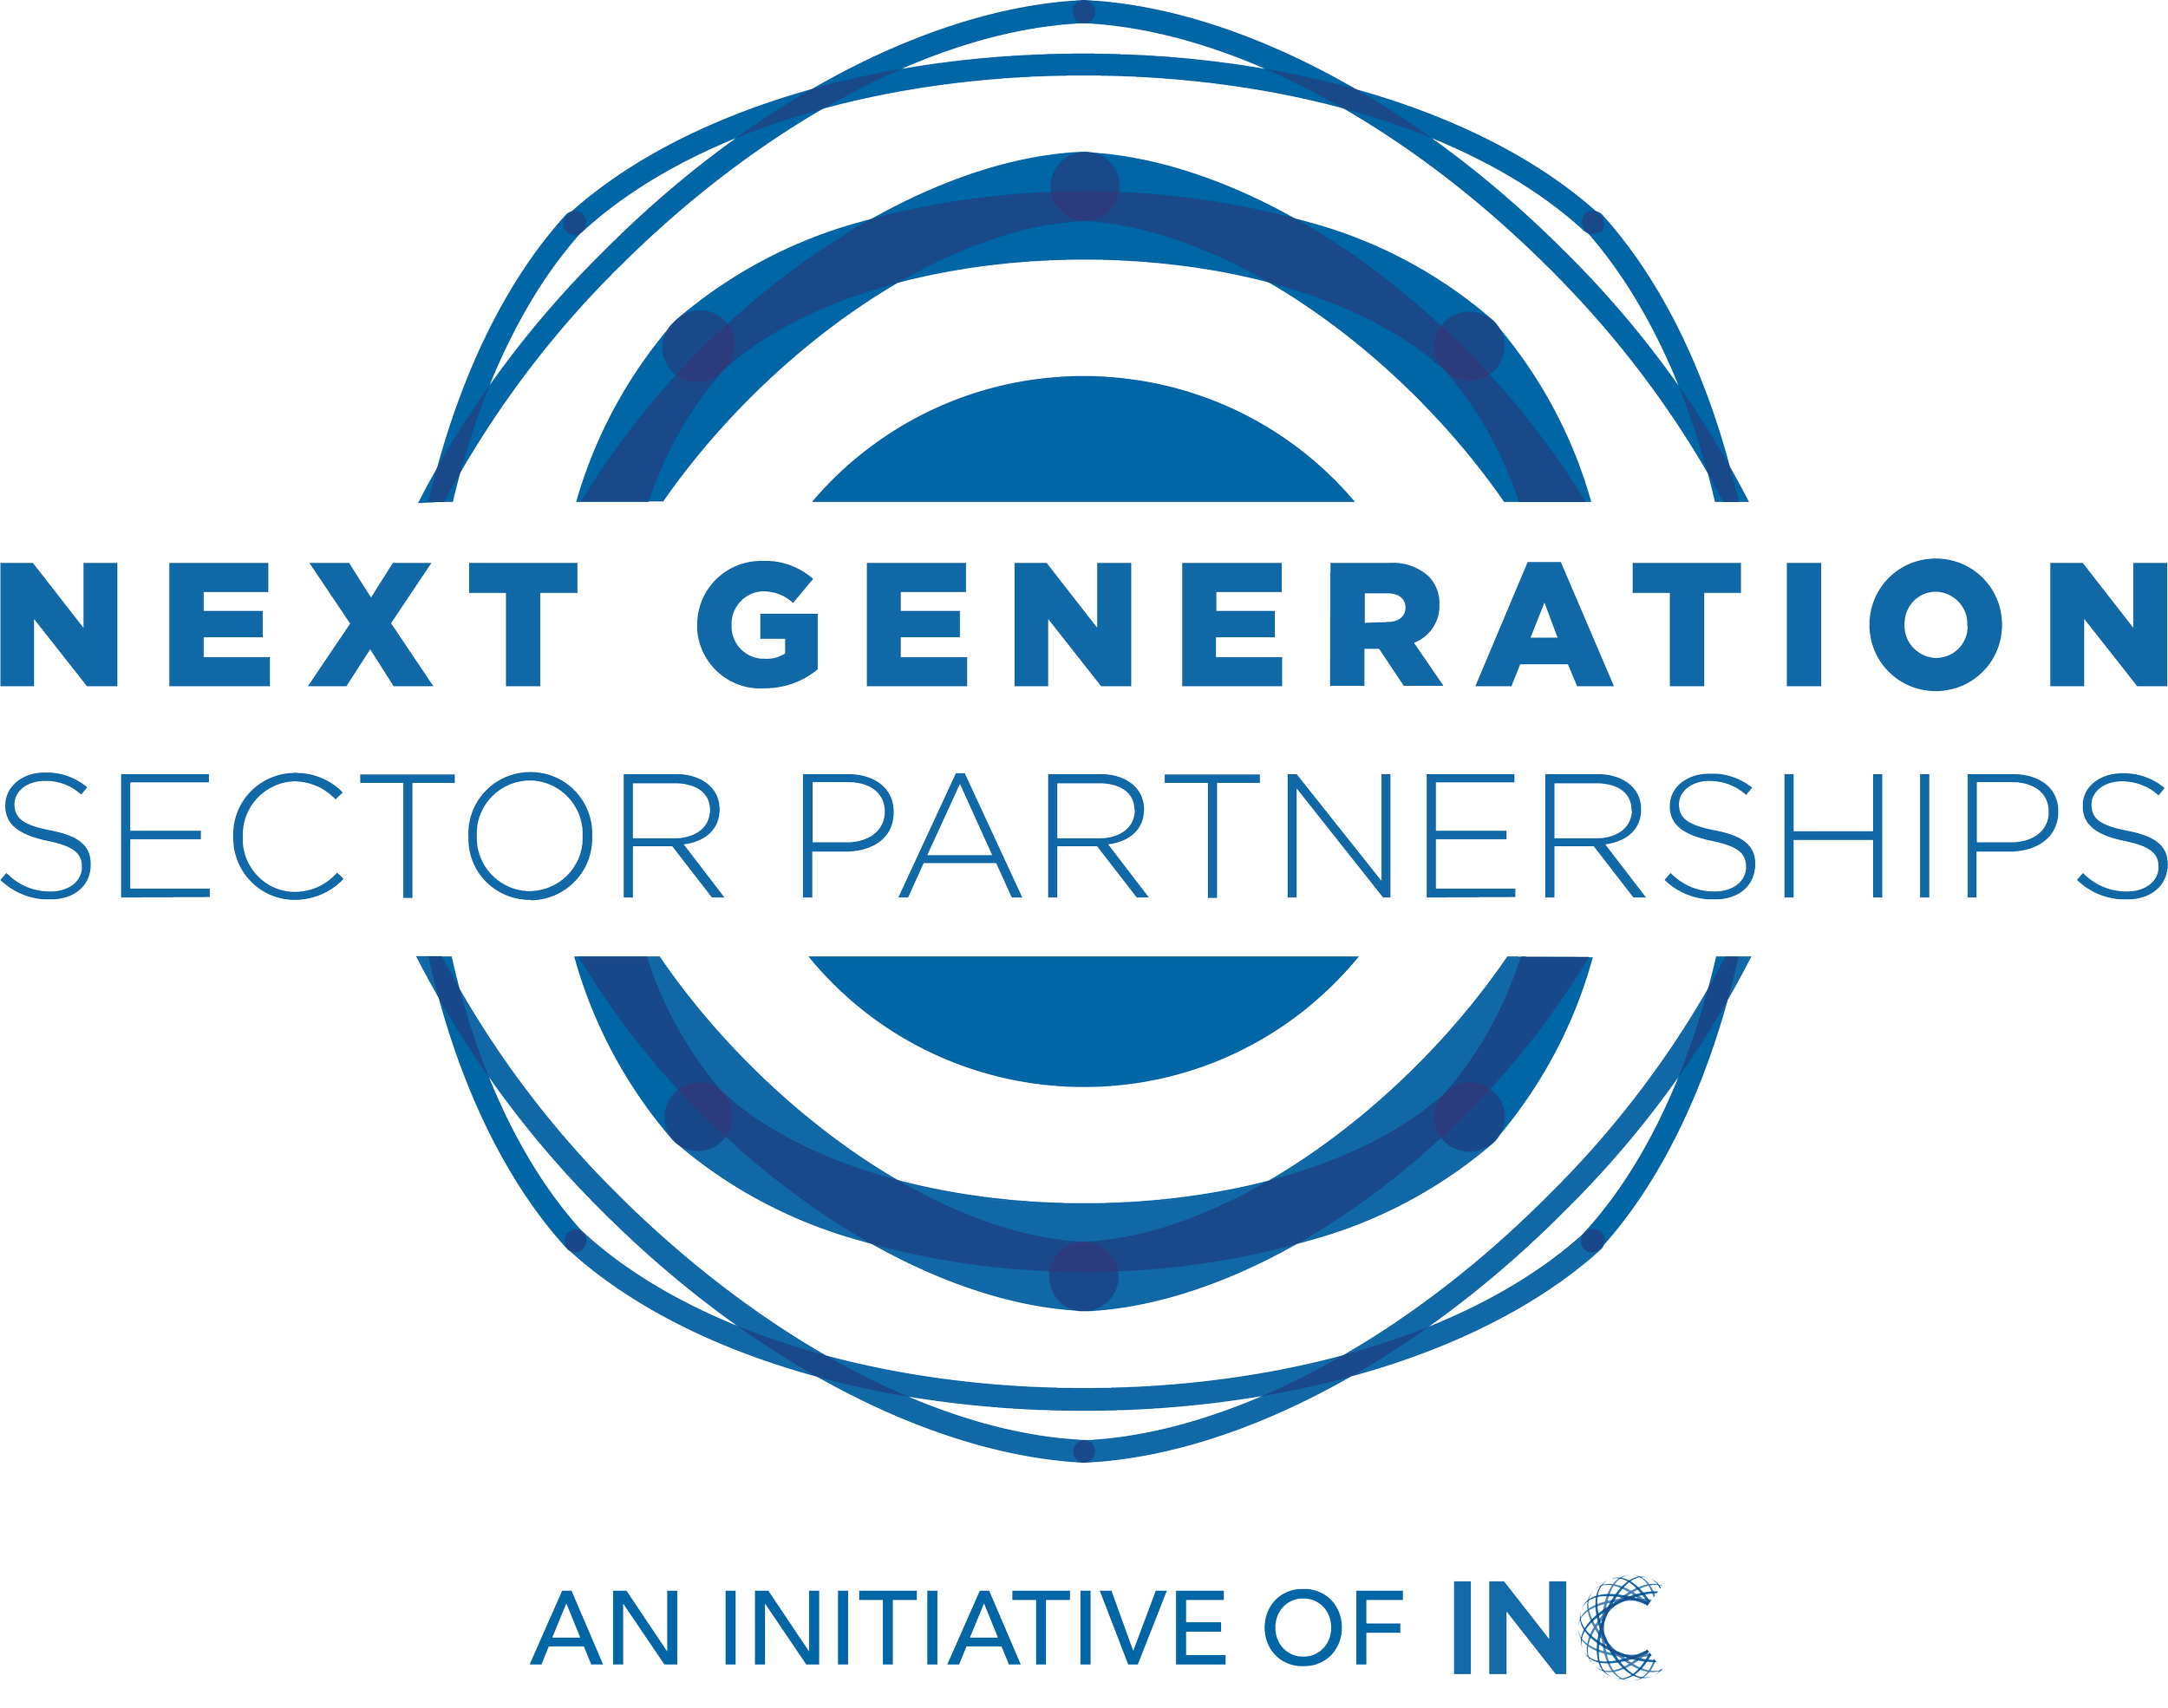 Next Generation Sector Partnership Community of Practice